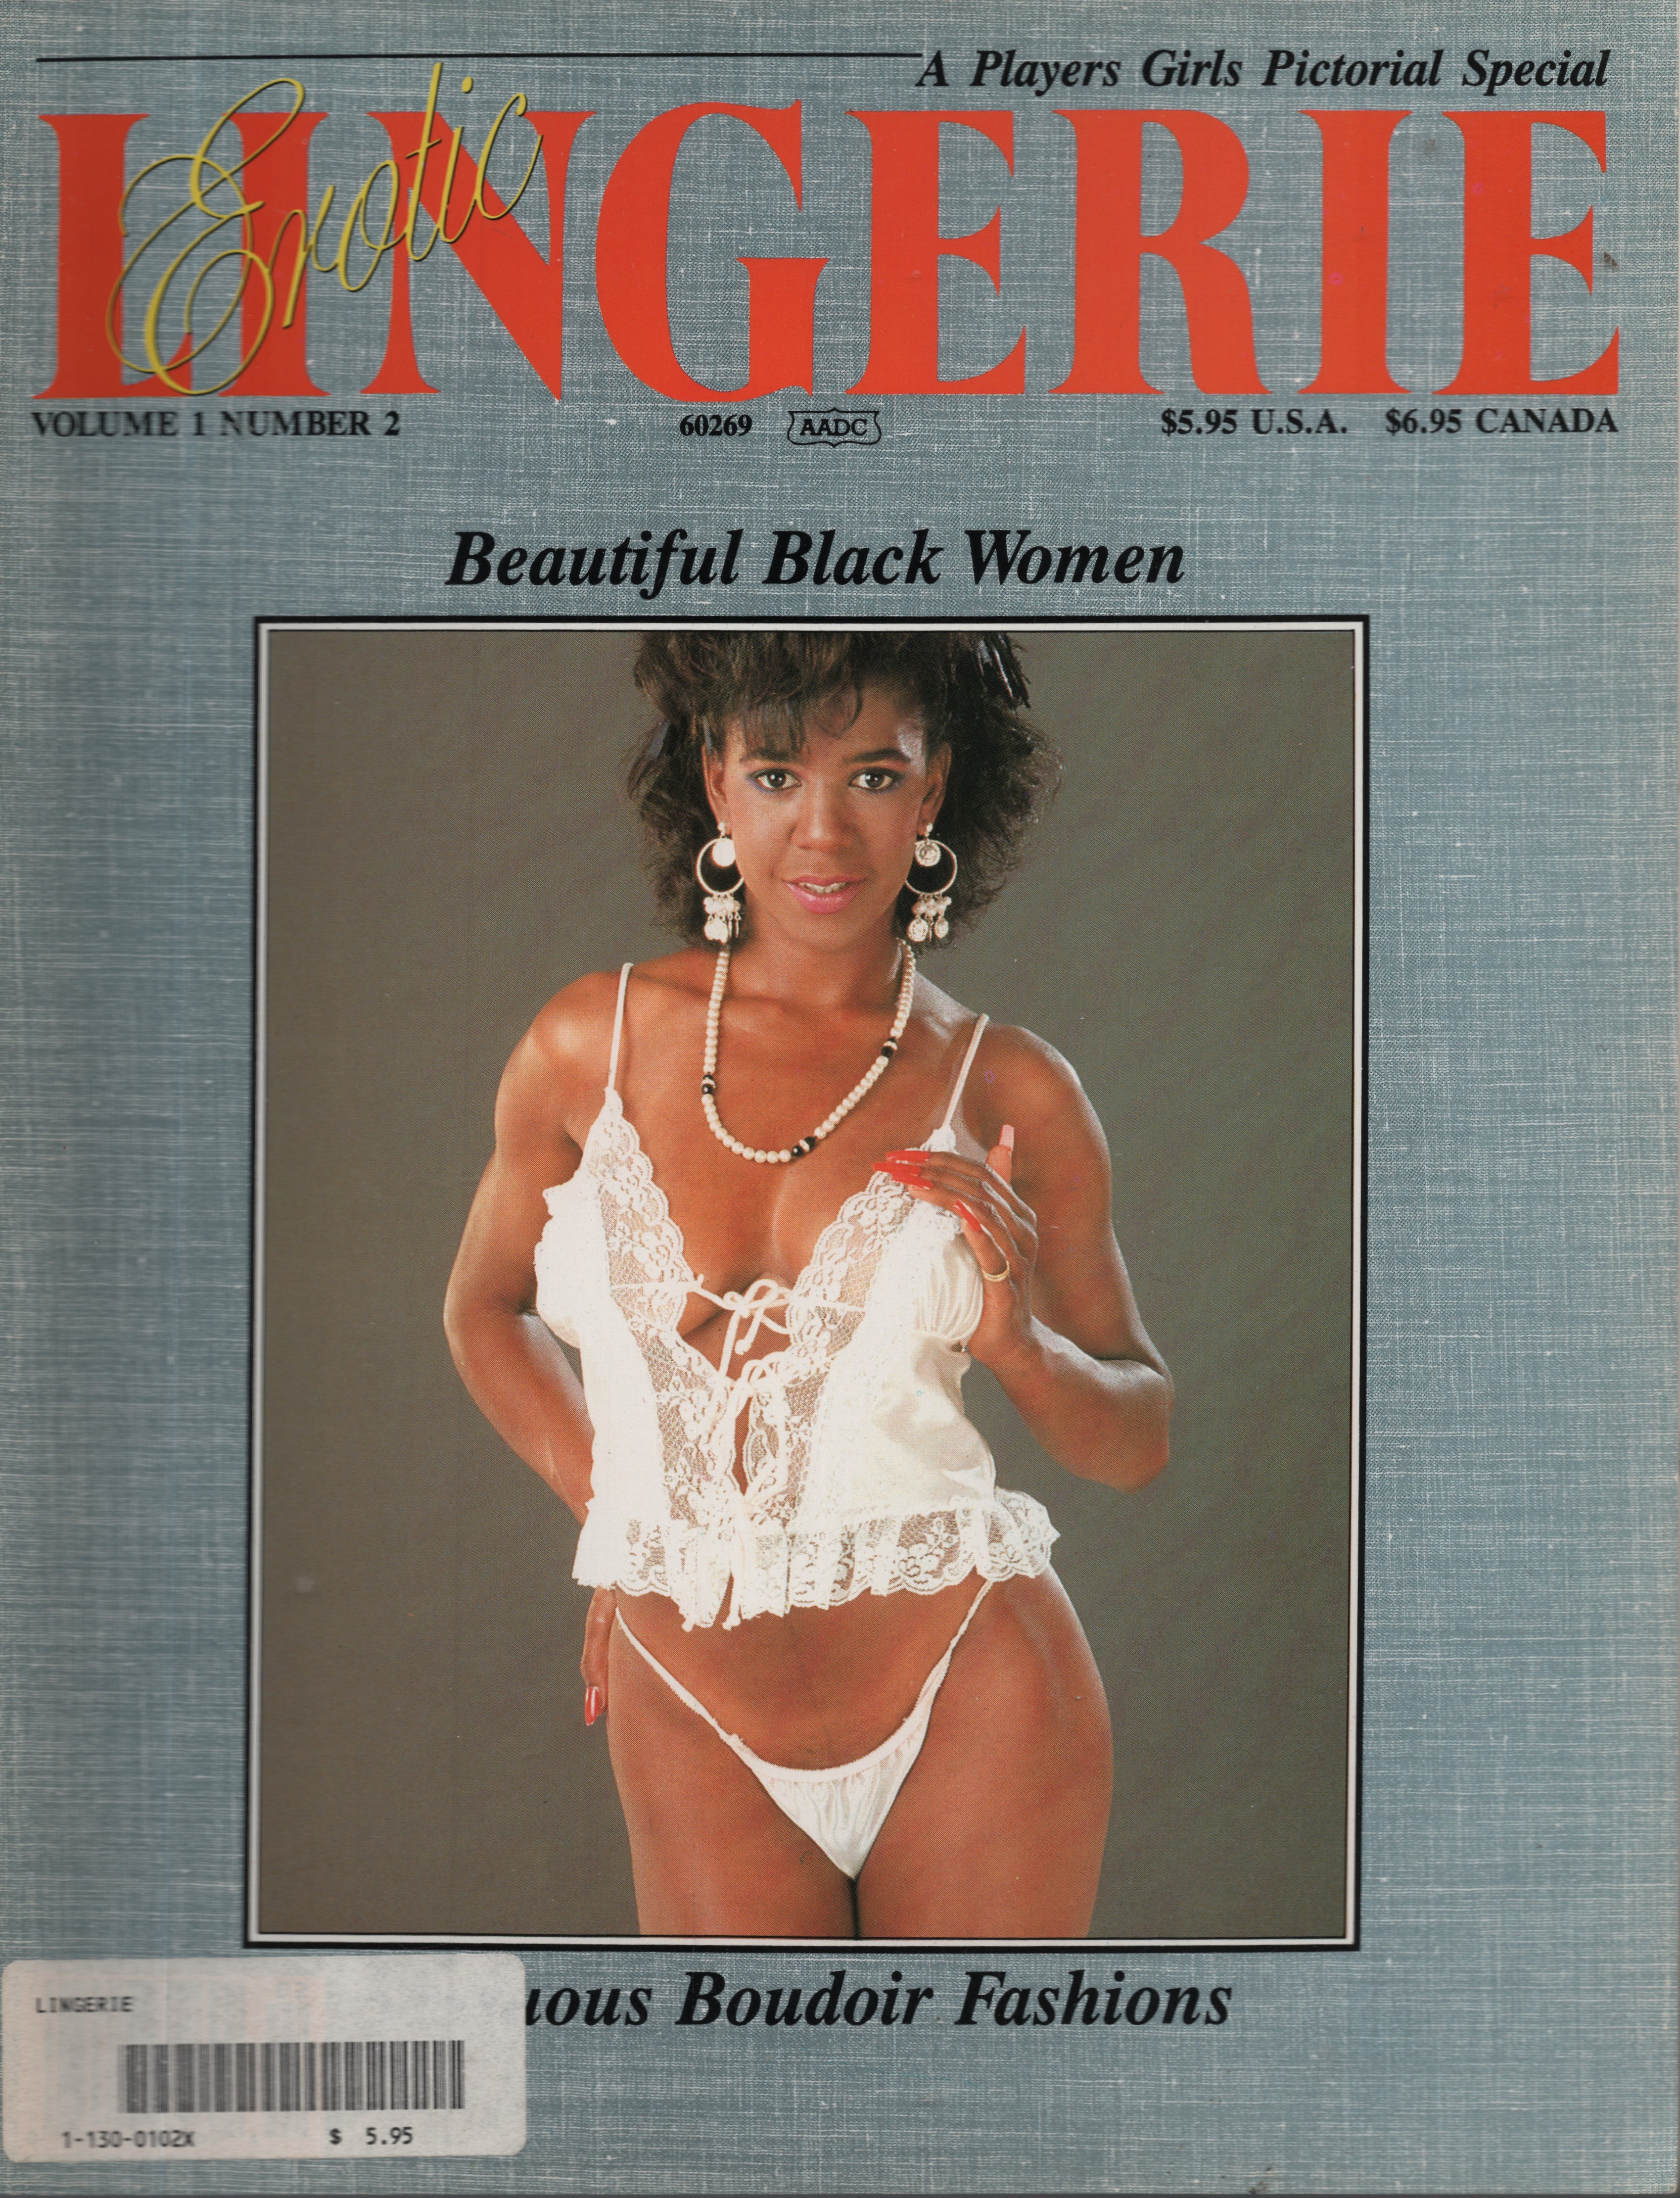 Players Girls Erotic Lingerie Vol. 1 # 2 magazine back issue Players Girls Erotic Lingerie magizine back copy 